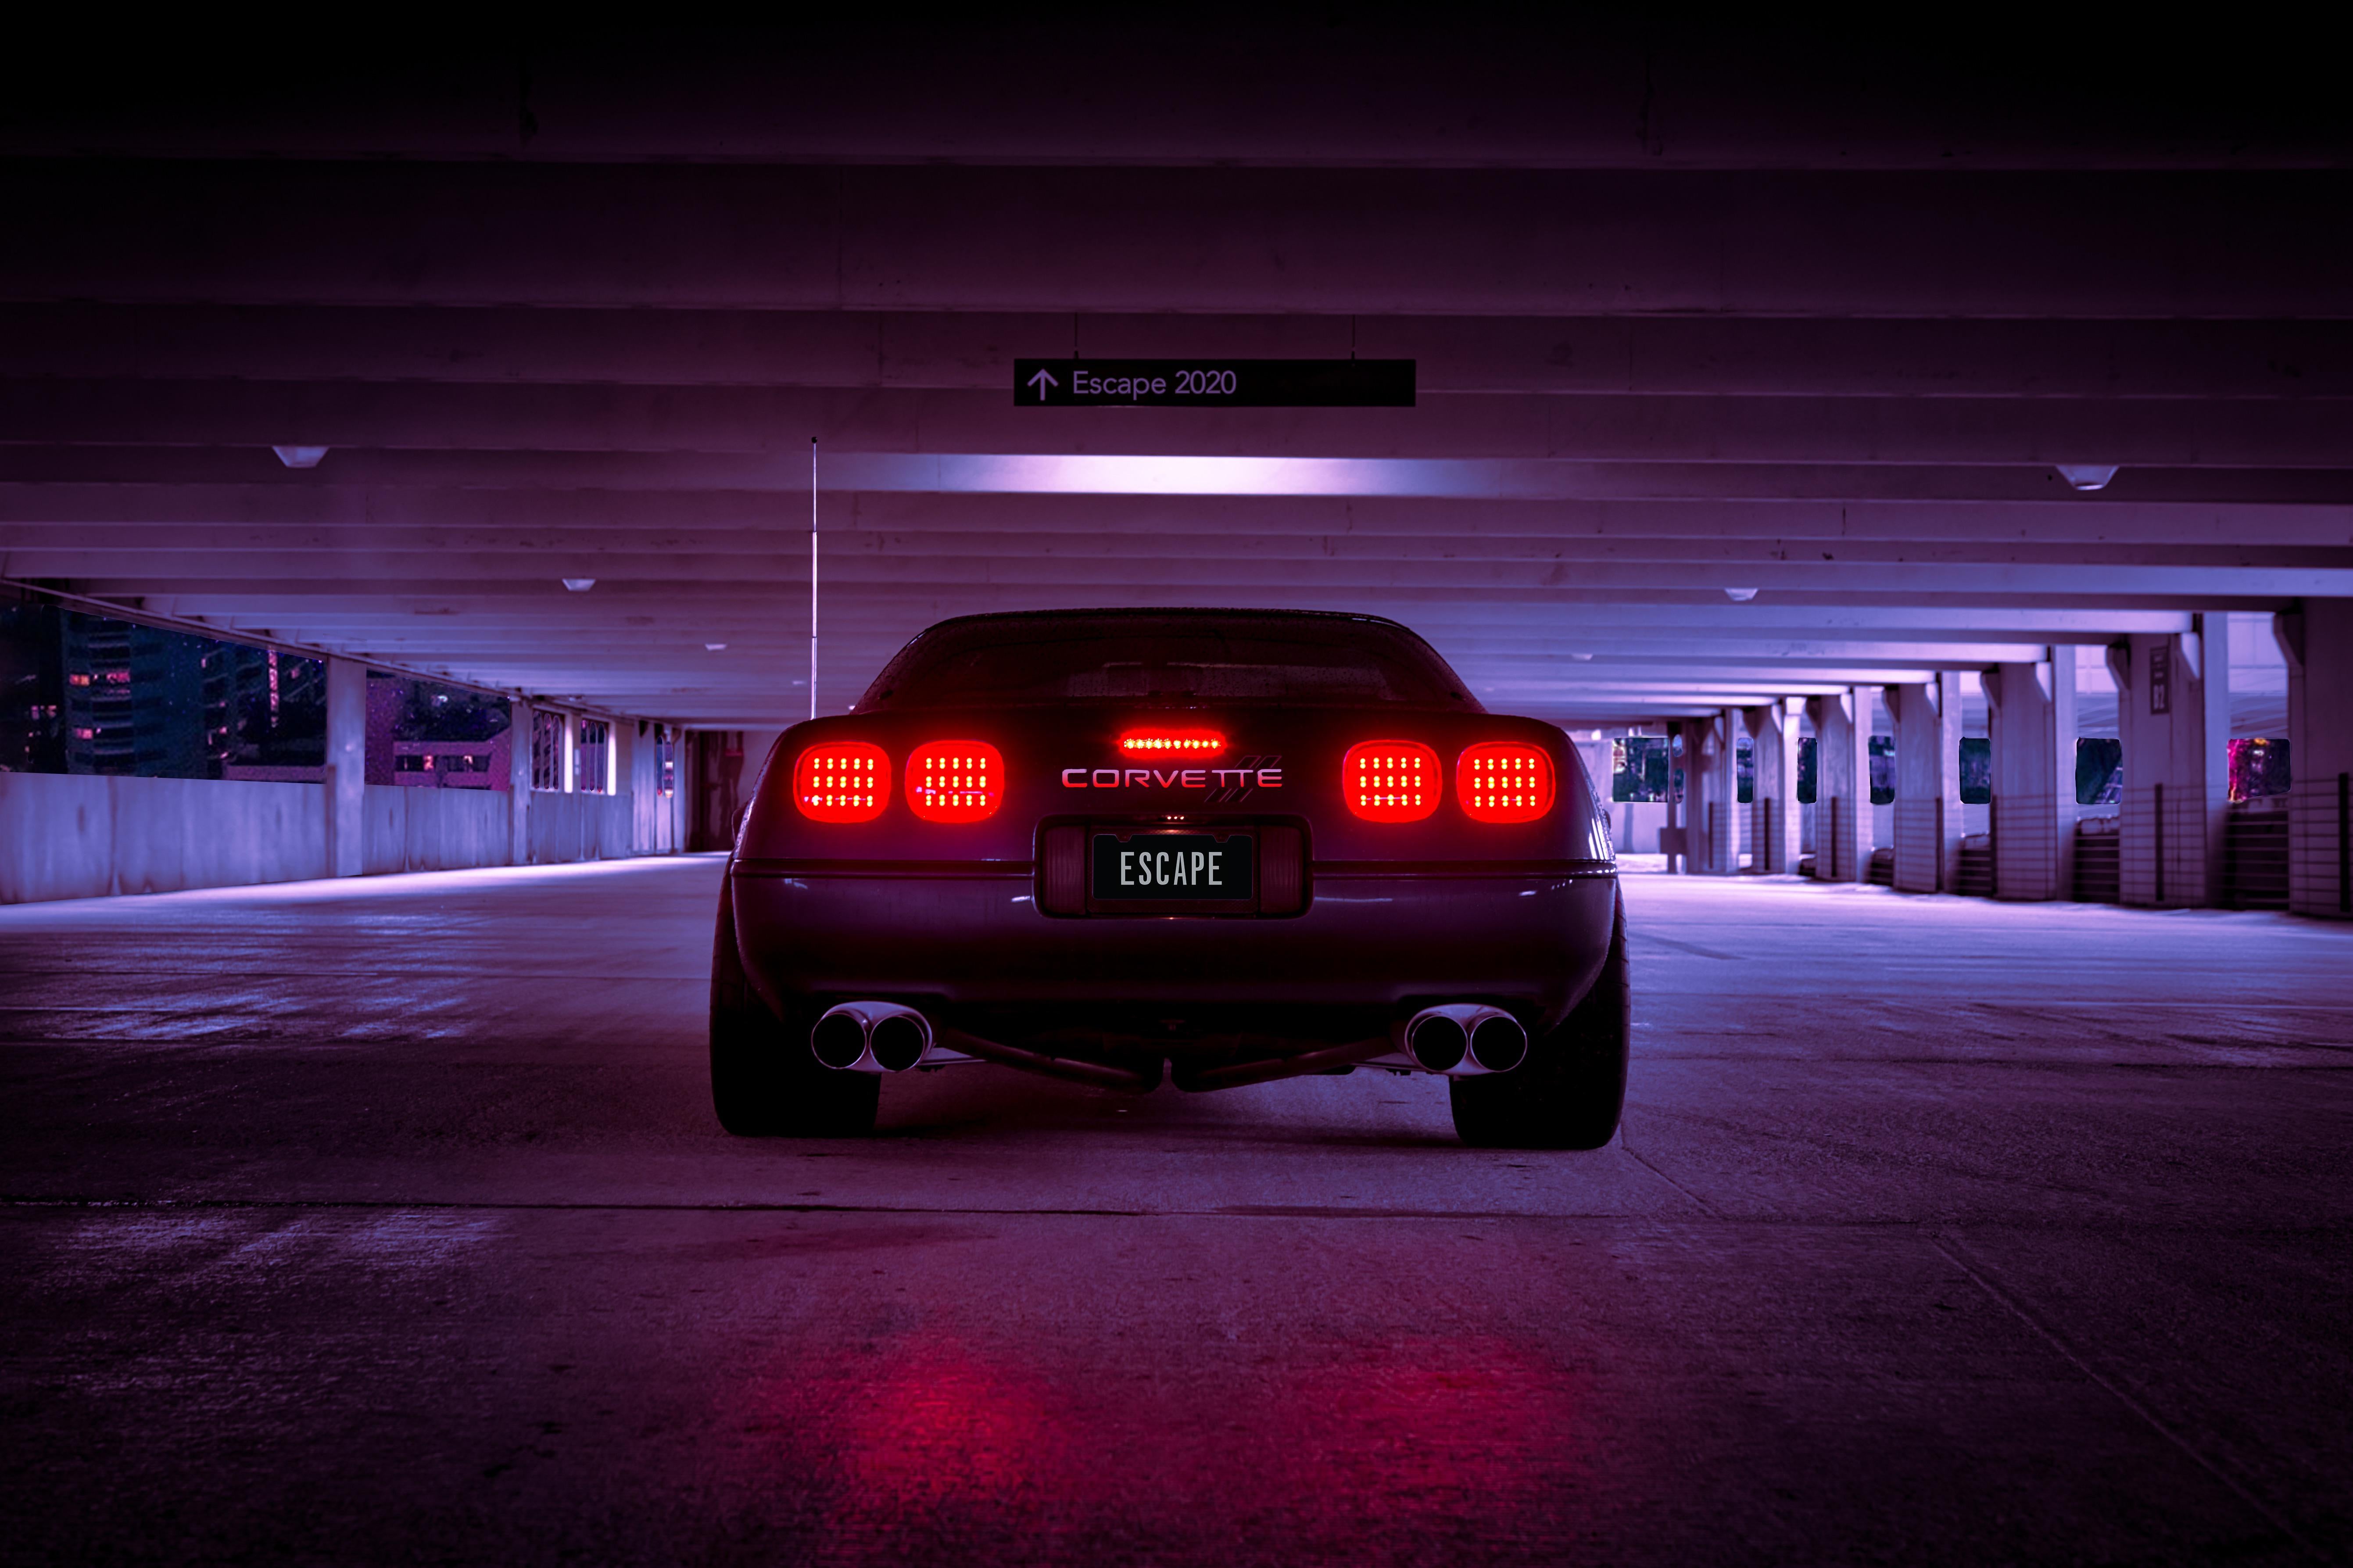 Corevette C4 Escape 2020 Retrowave, HD Cars, 4k Wallpaper, Image, Background, Photo and Picture